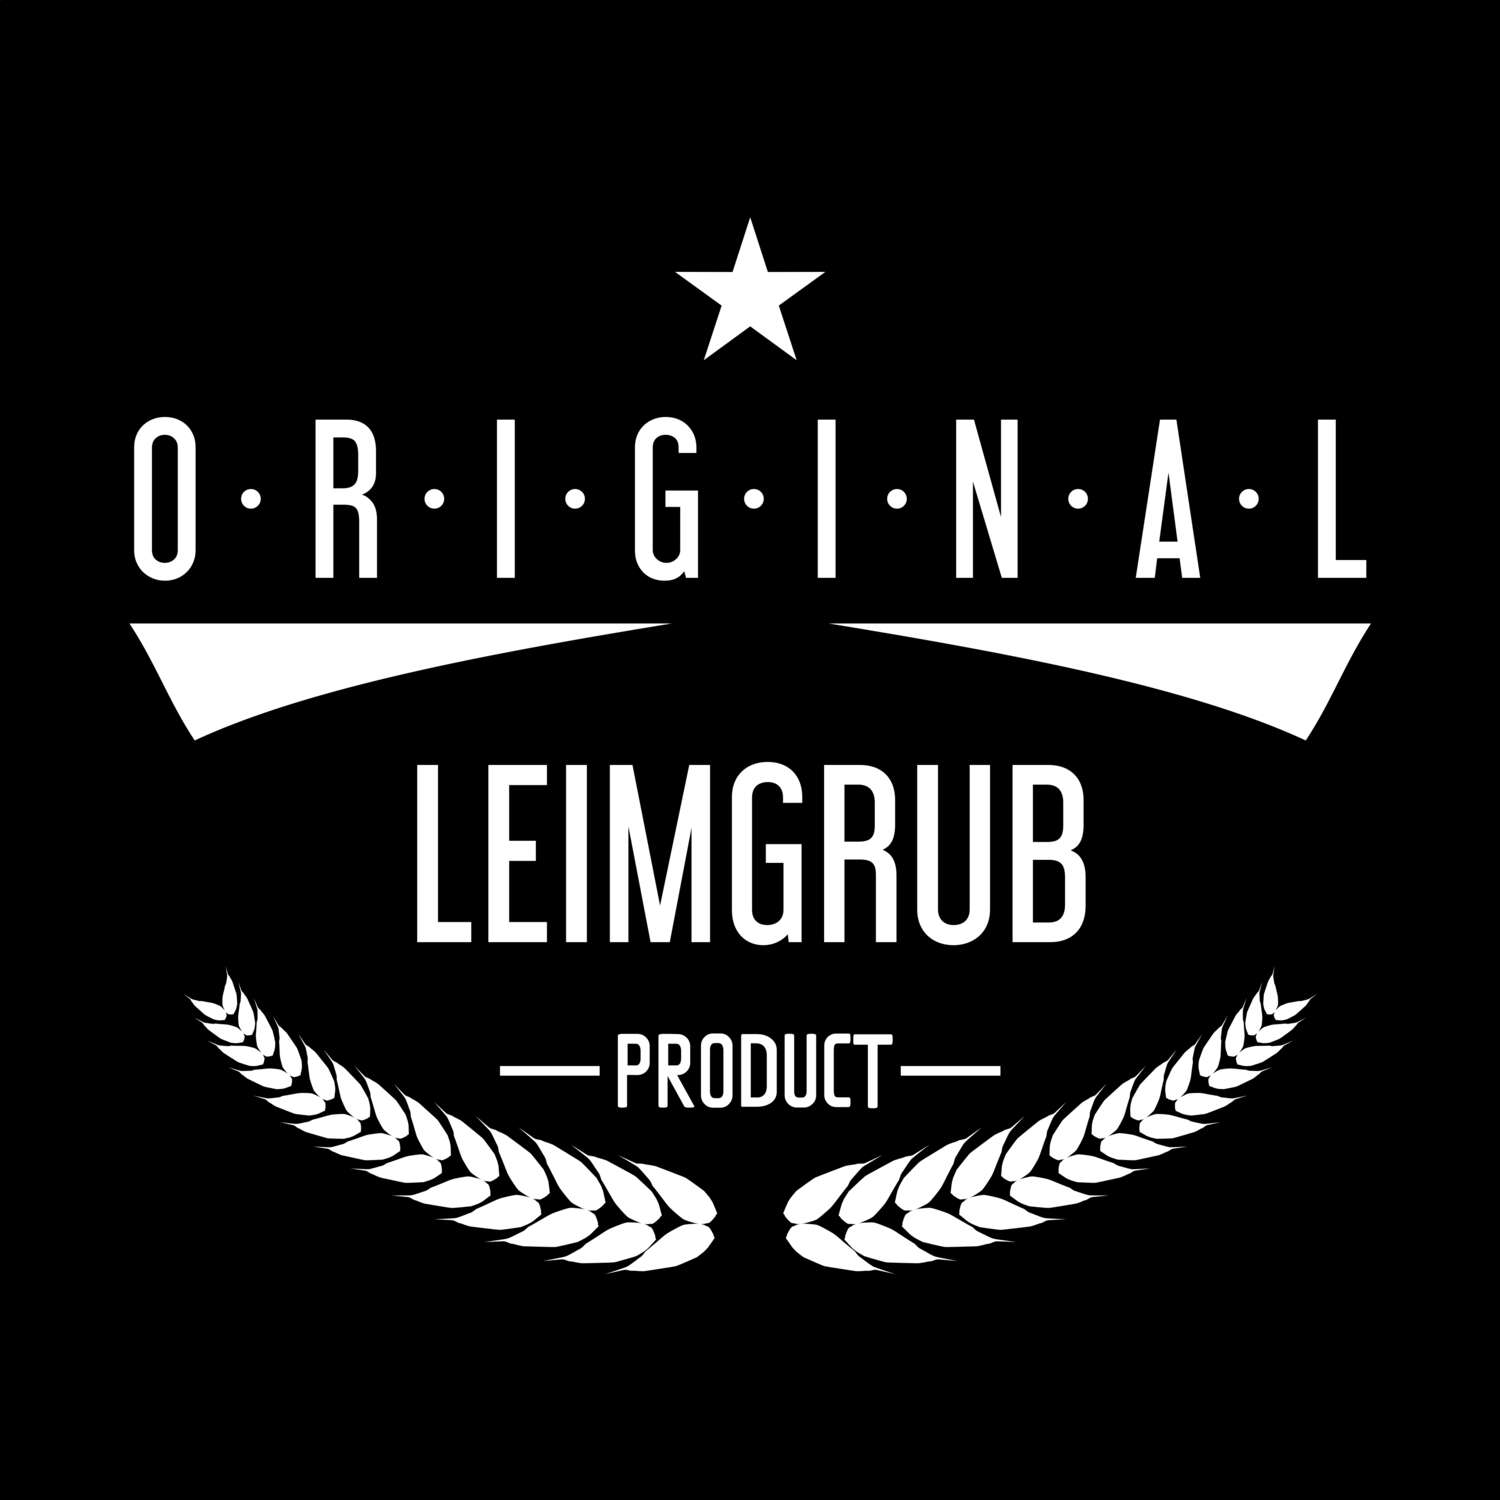 Leimgrub T-Shirt »Original Product«